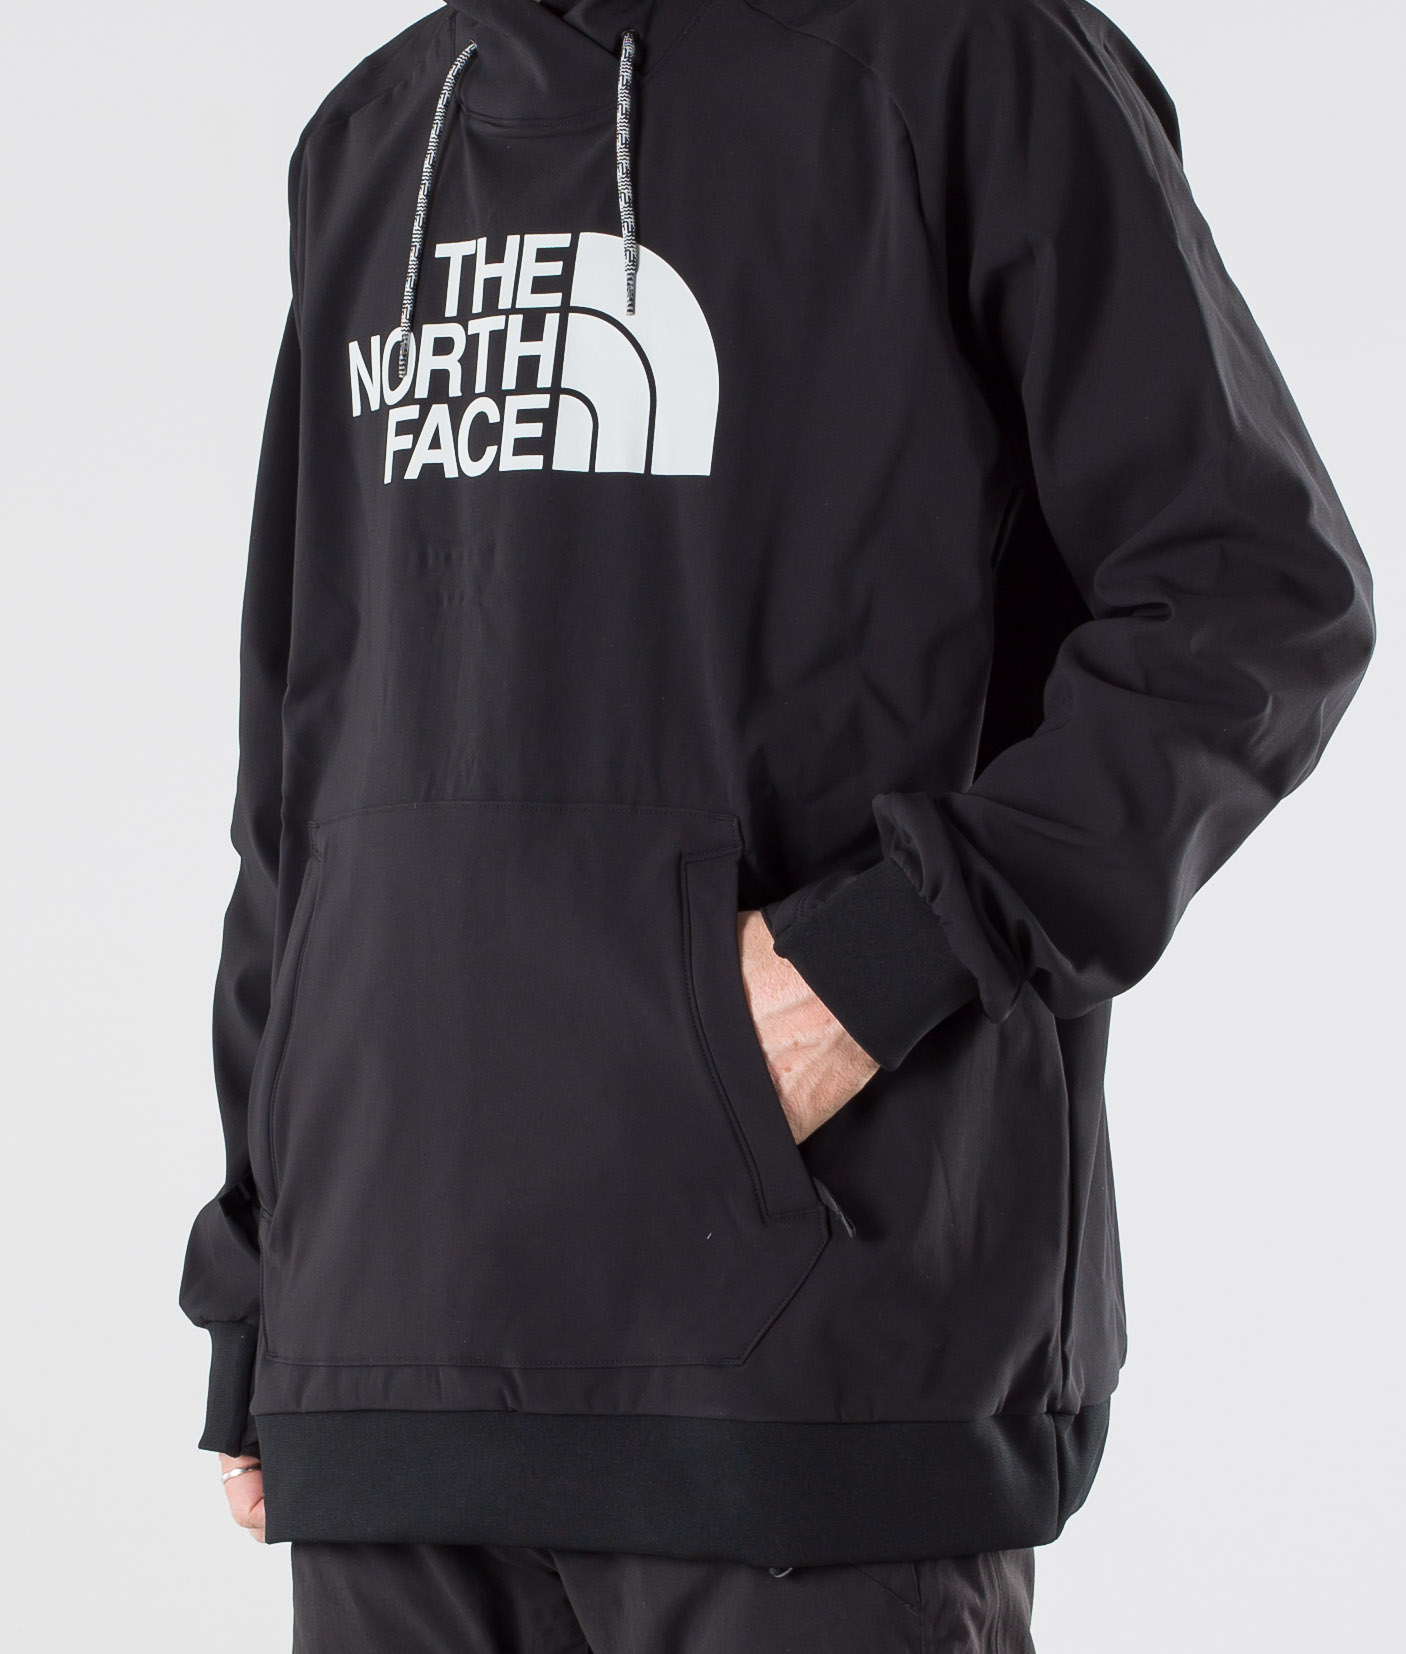 The North Face Tekno Logo Sweats à 